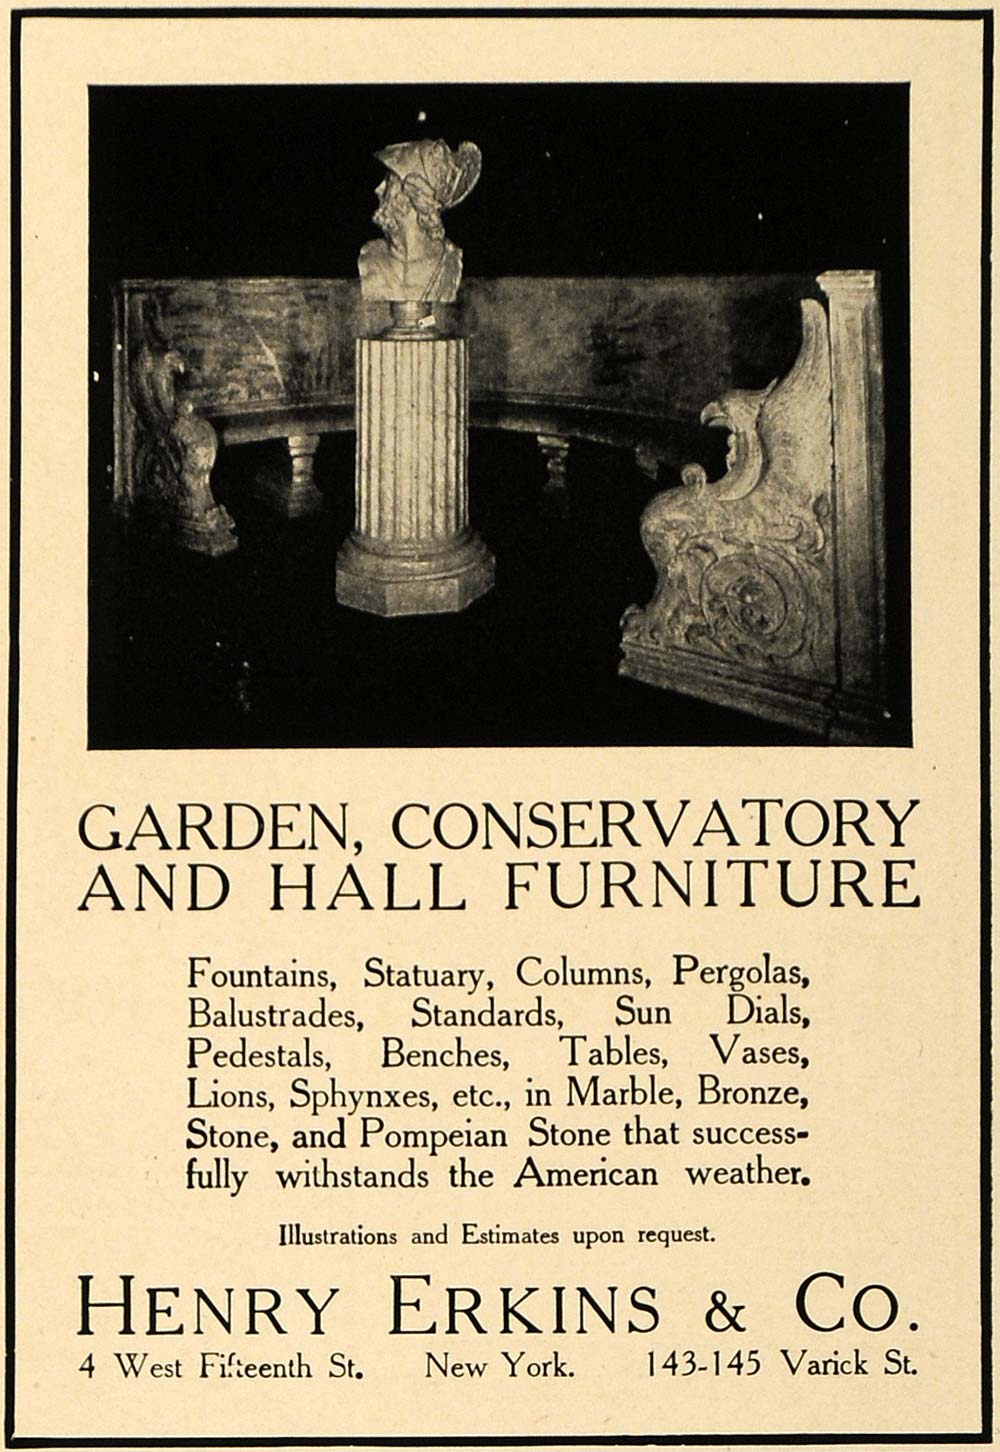 1906 Ad Garden Conservatory Furniture Henry Erkins Co. - ORIGINAL CL9